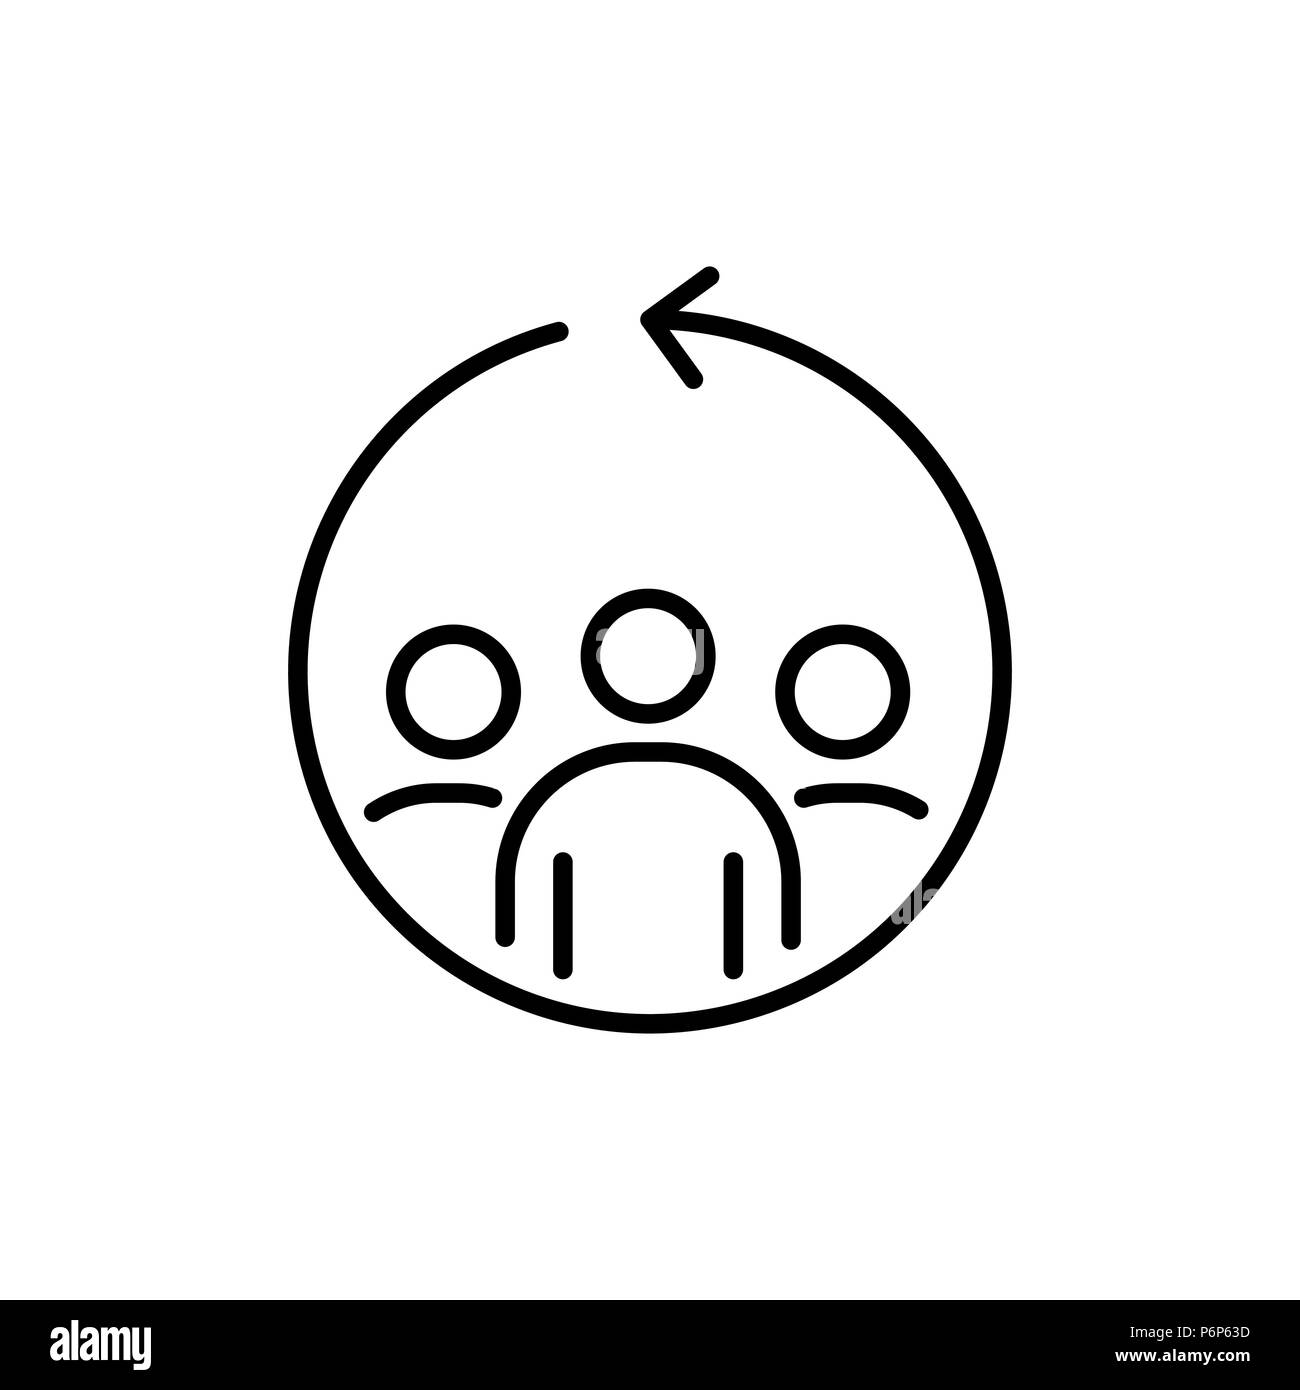 Teamwork business people icon simple line flat illustration. Stock Vector